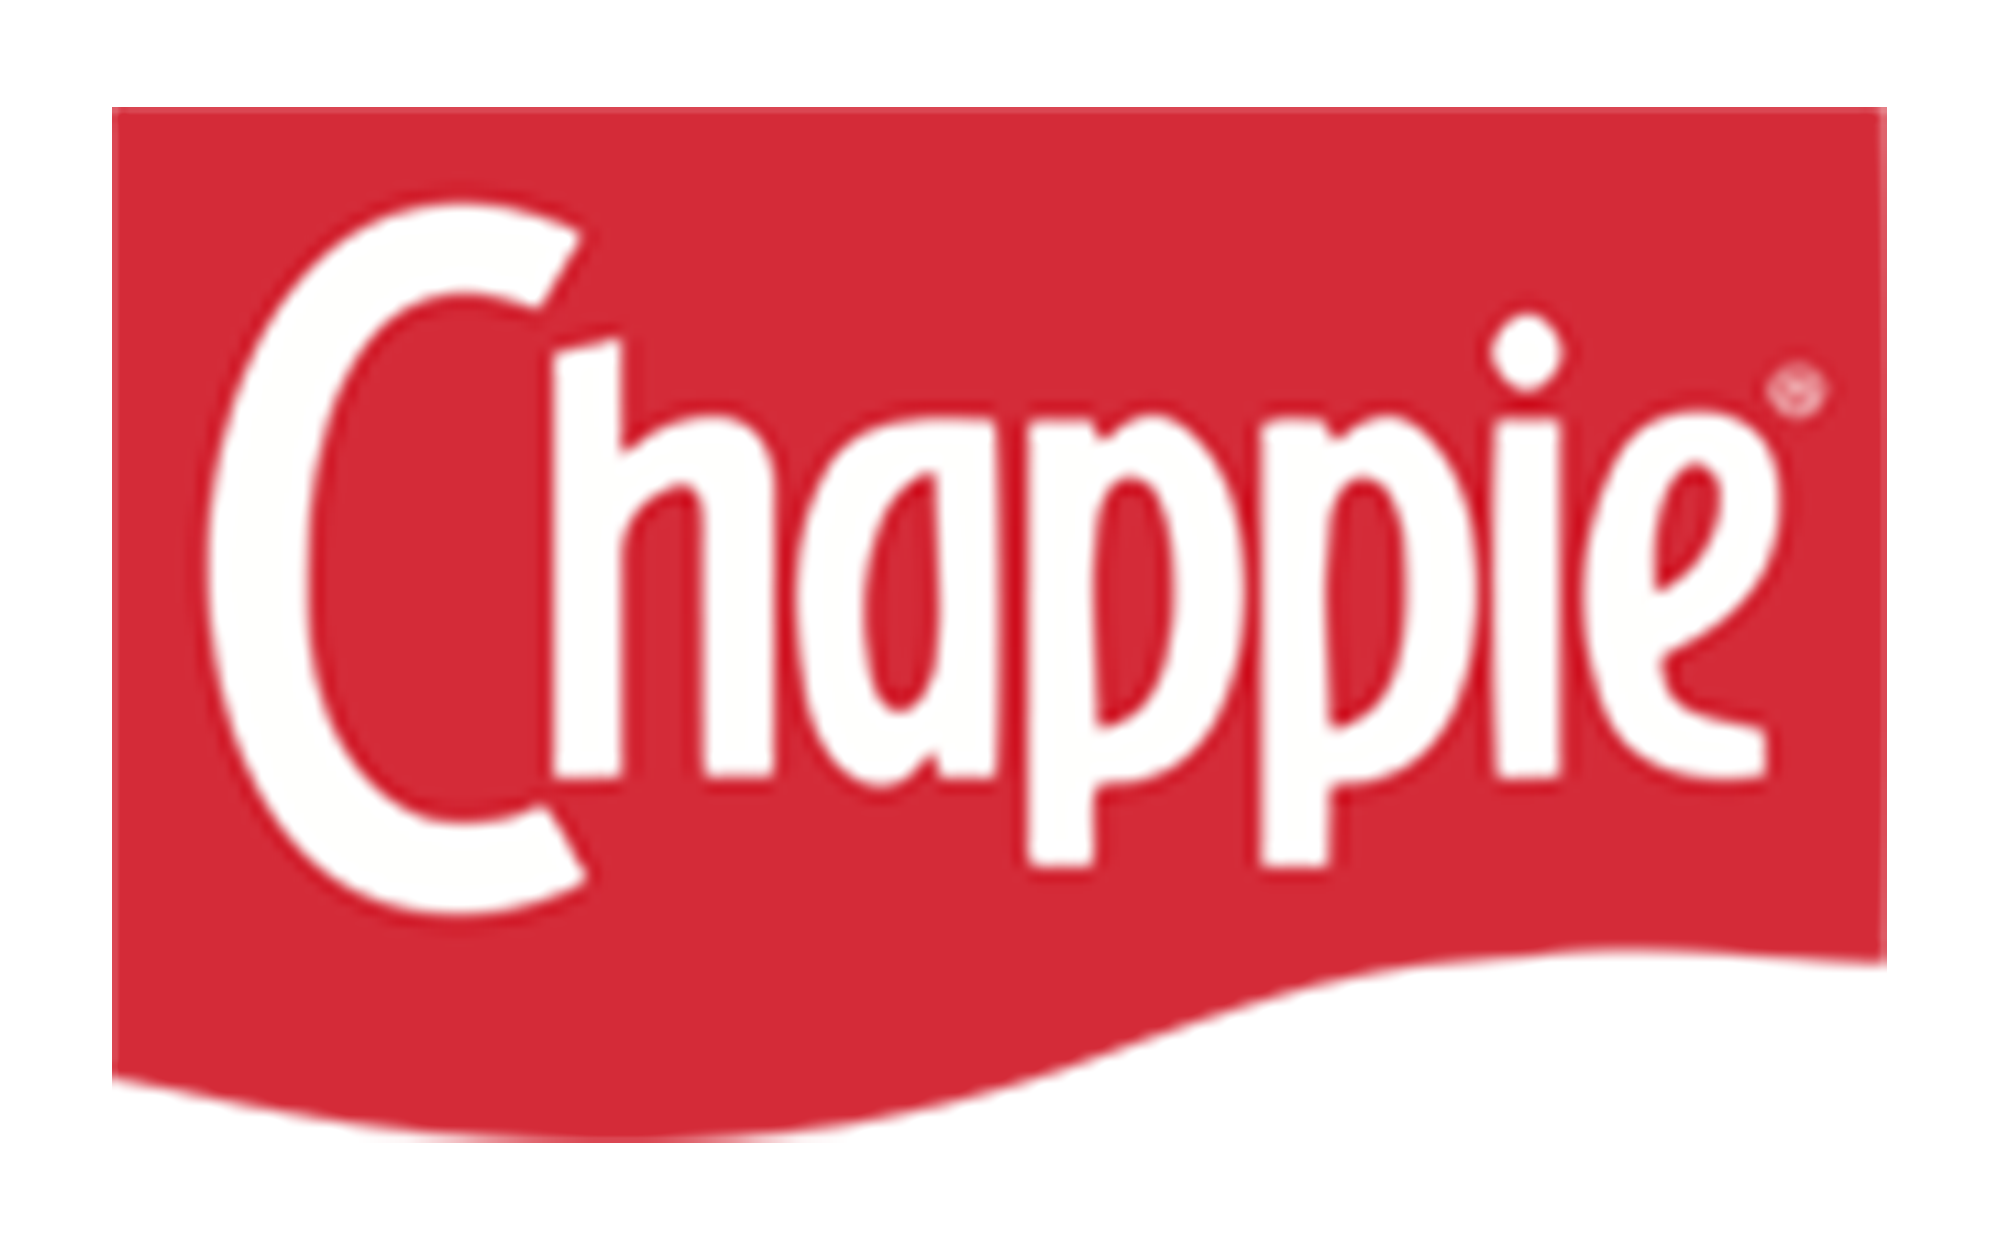 Chappie Dog Food